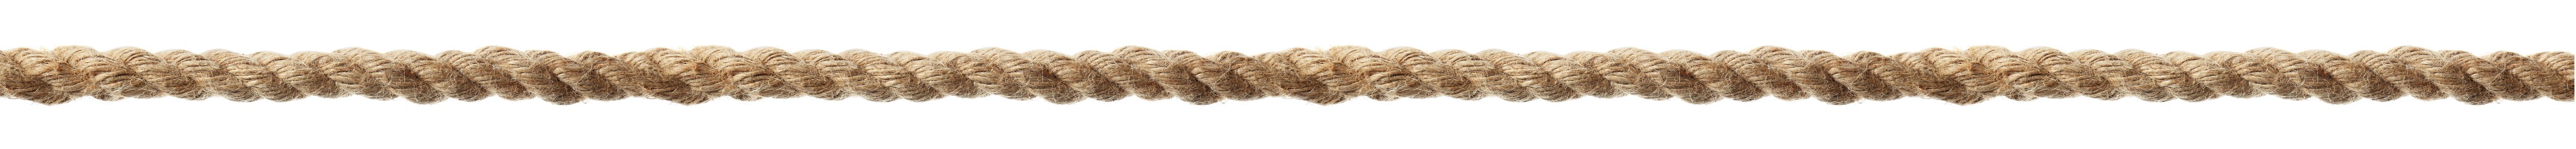 Image of Long durable hemp rope on white background